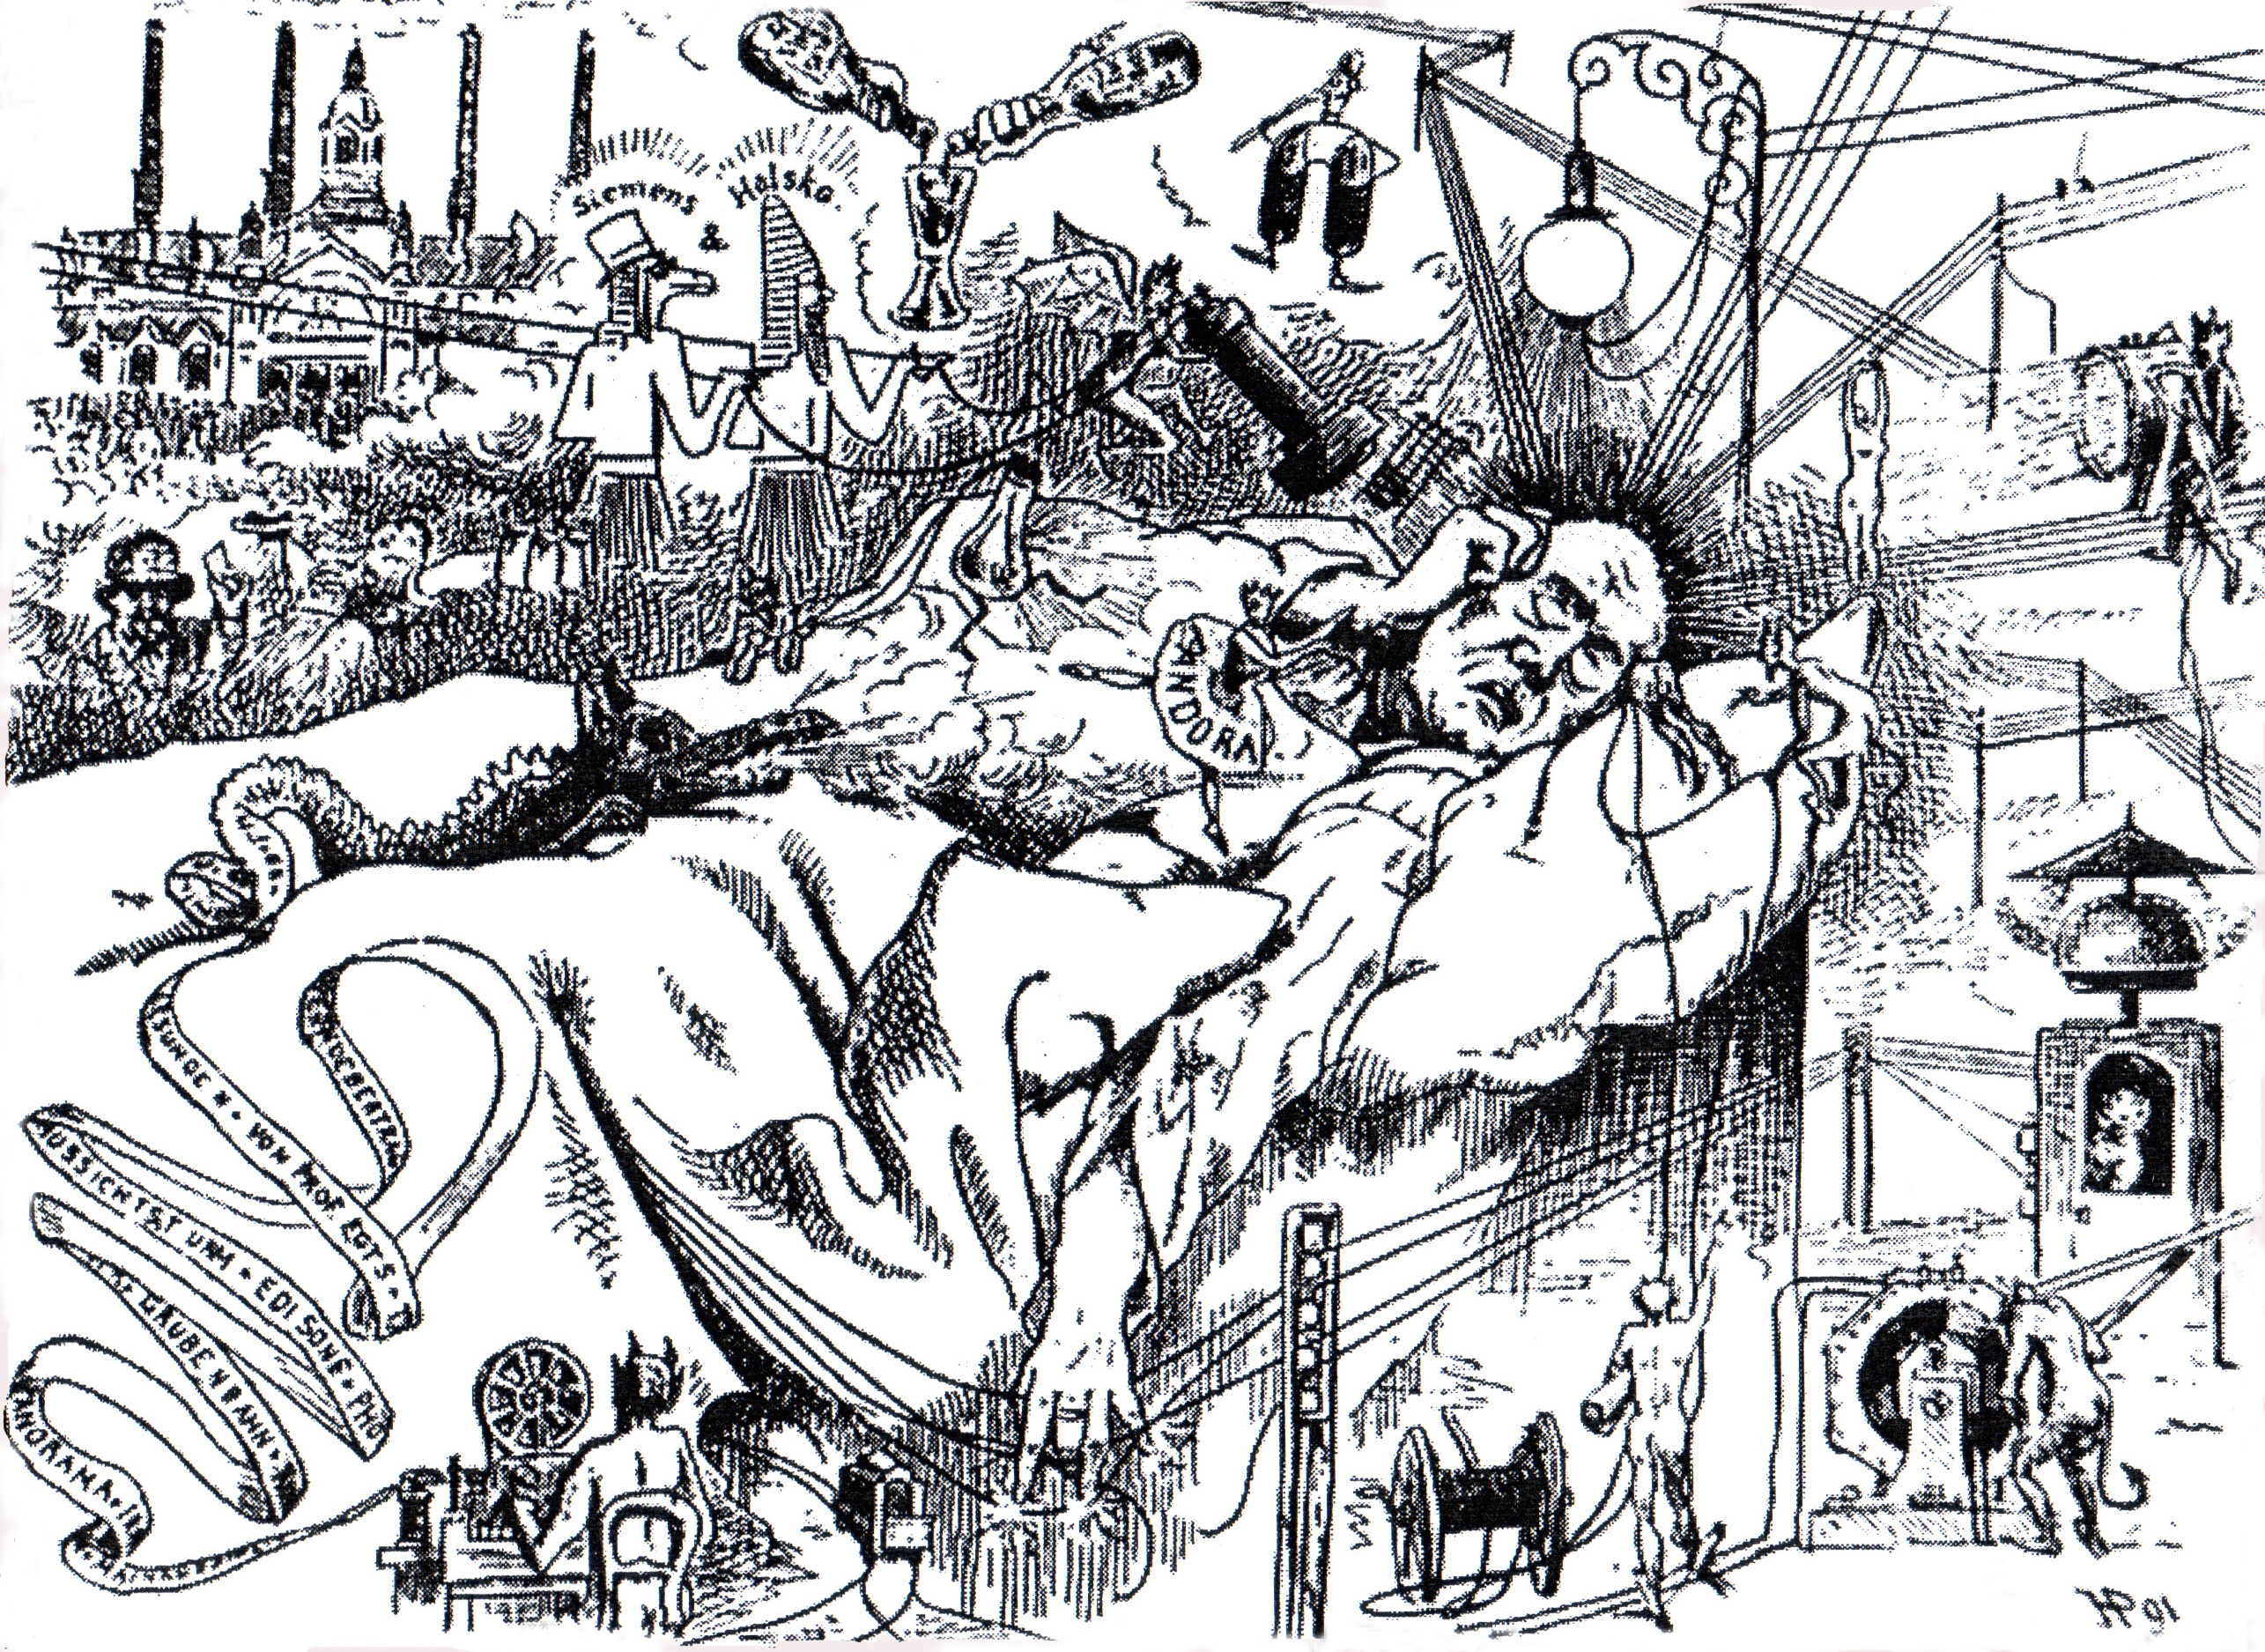 Der bedrängte Mensch: Illustration, 1891